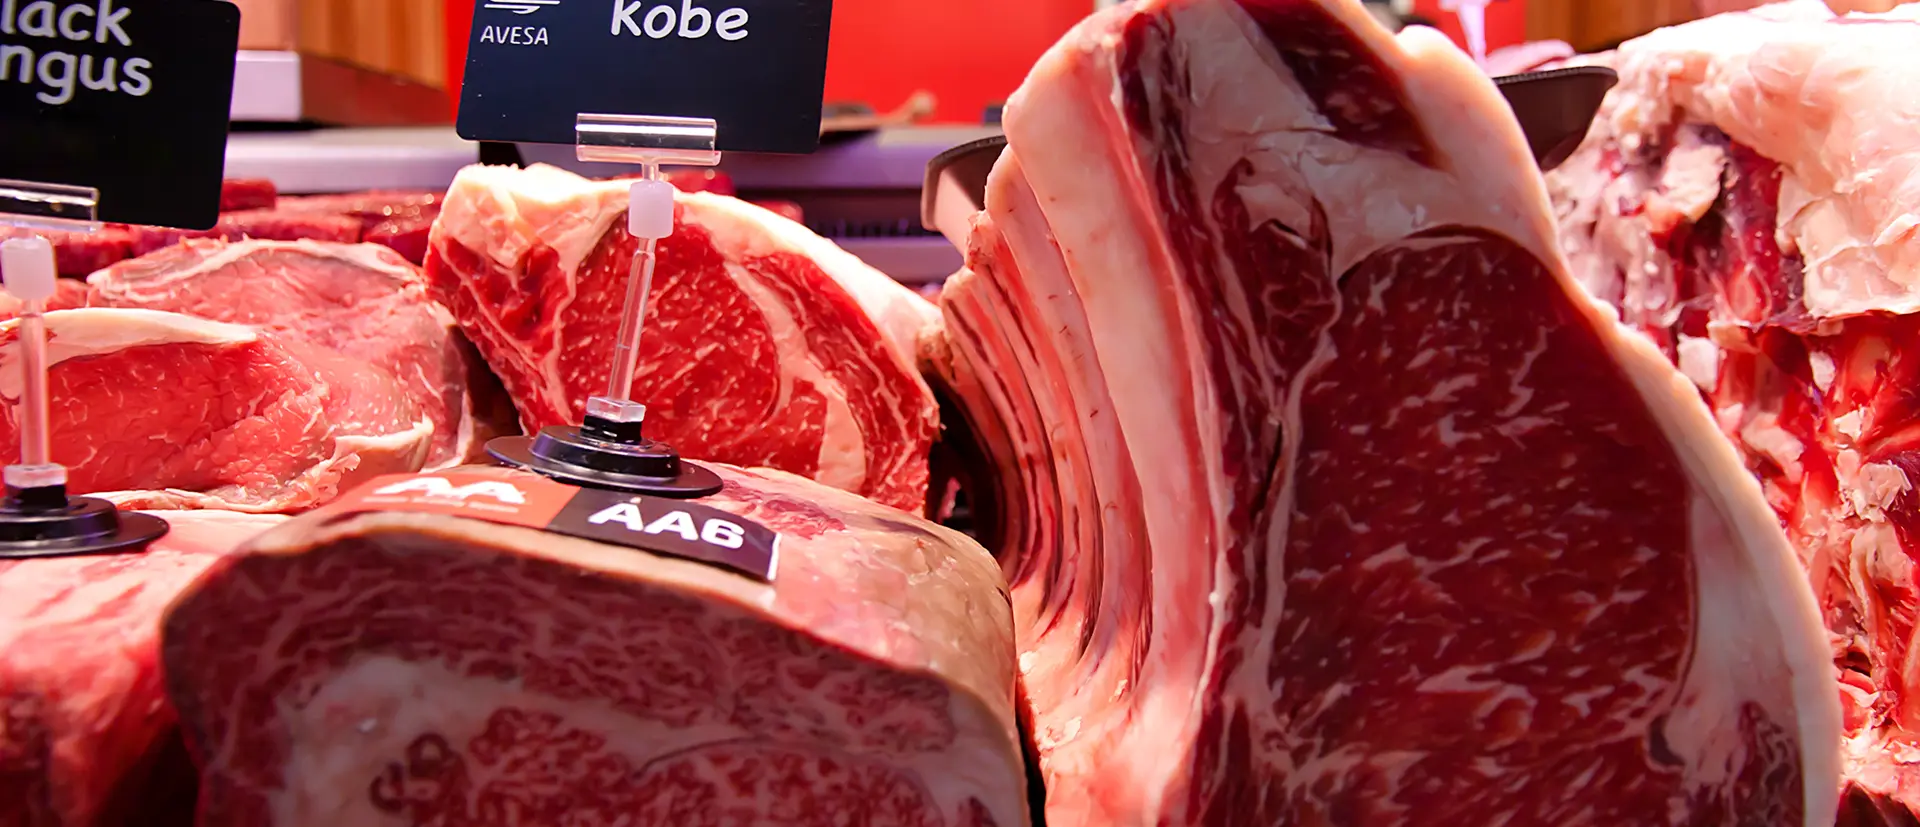 carne de kobe mallorca - Dónde se produce la carne Kobe